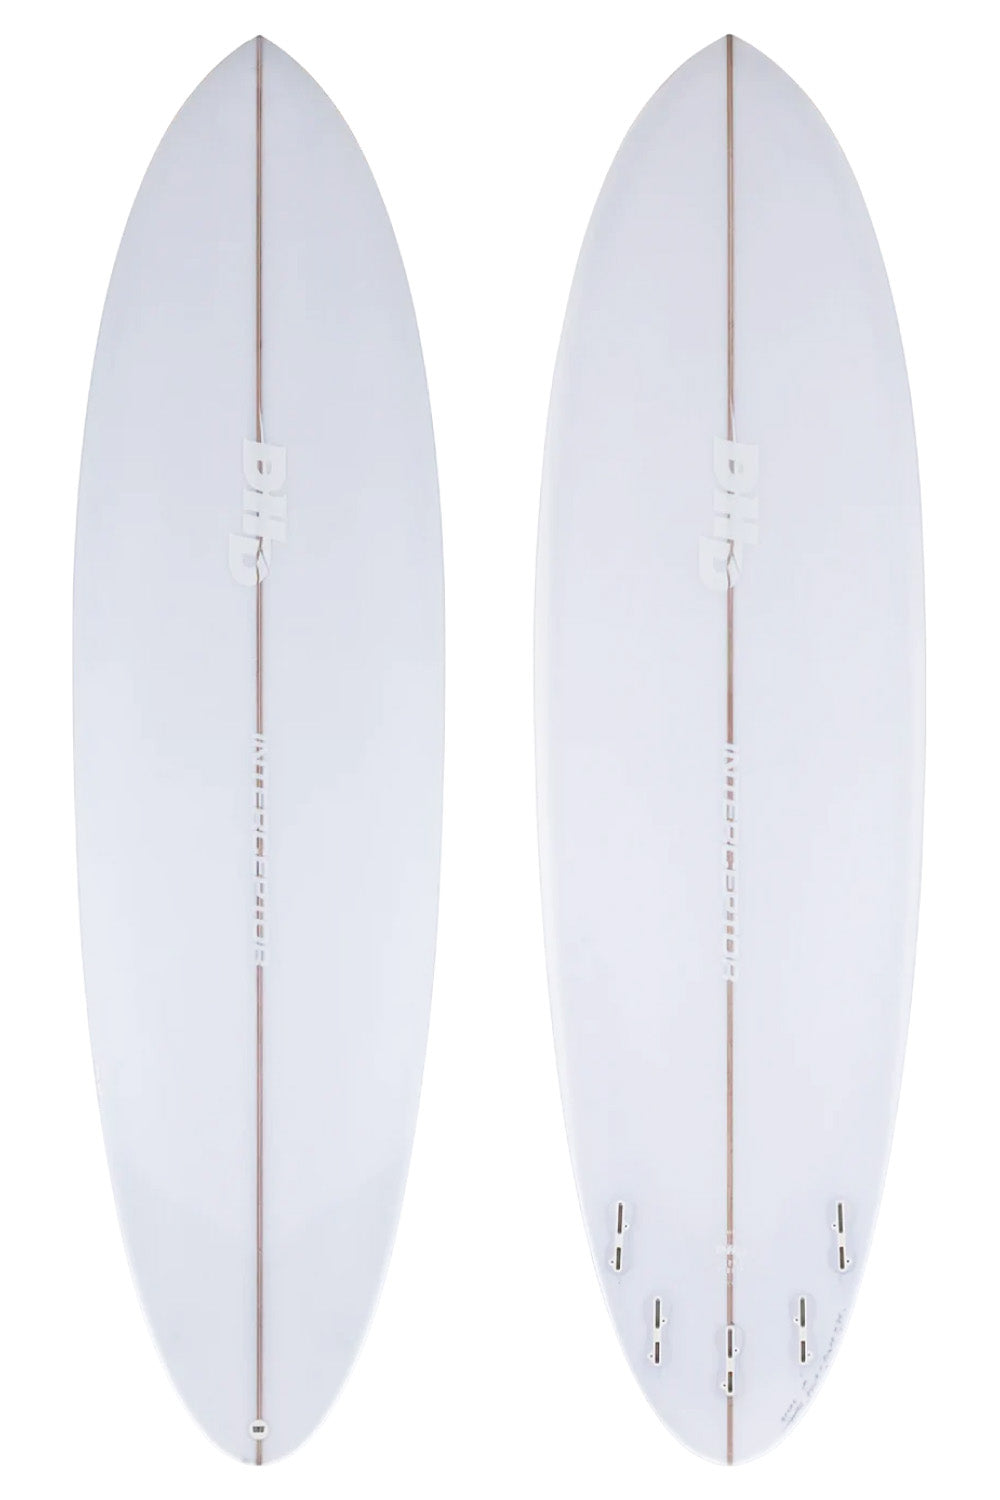 DHD Interceptor Mid Length Surfboard